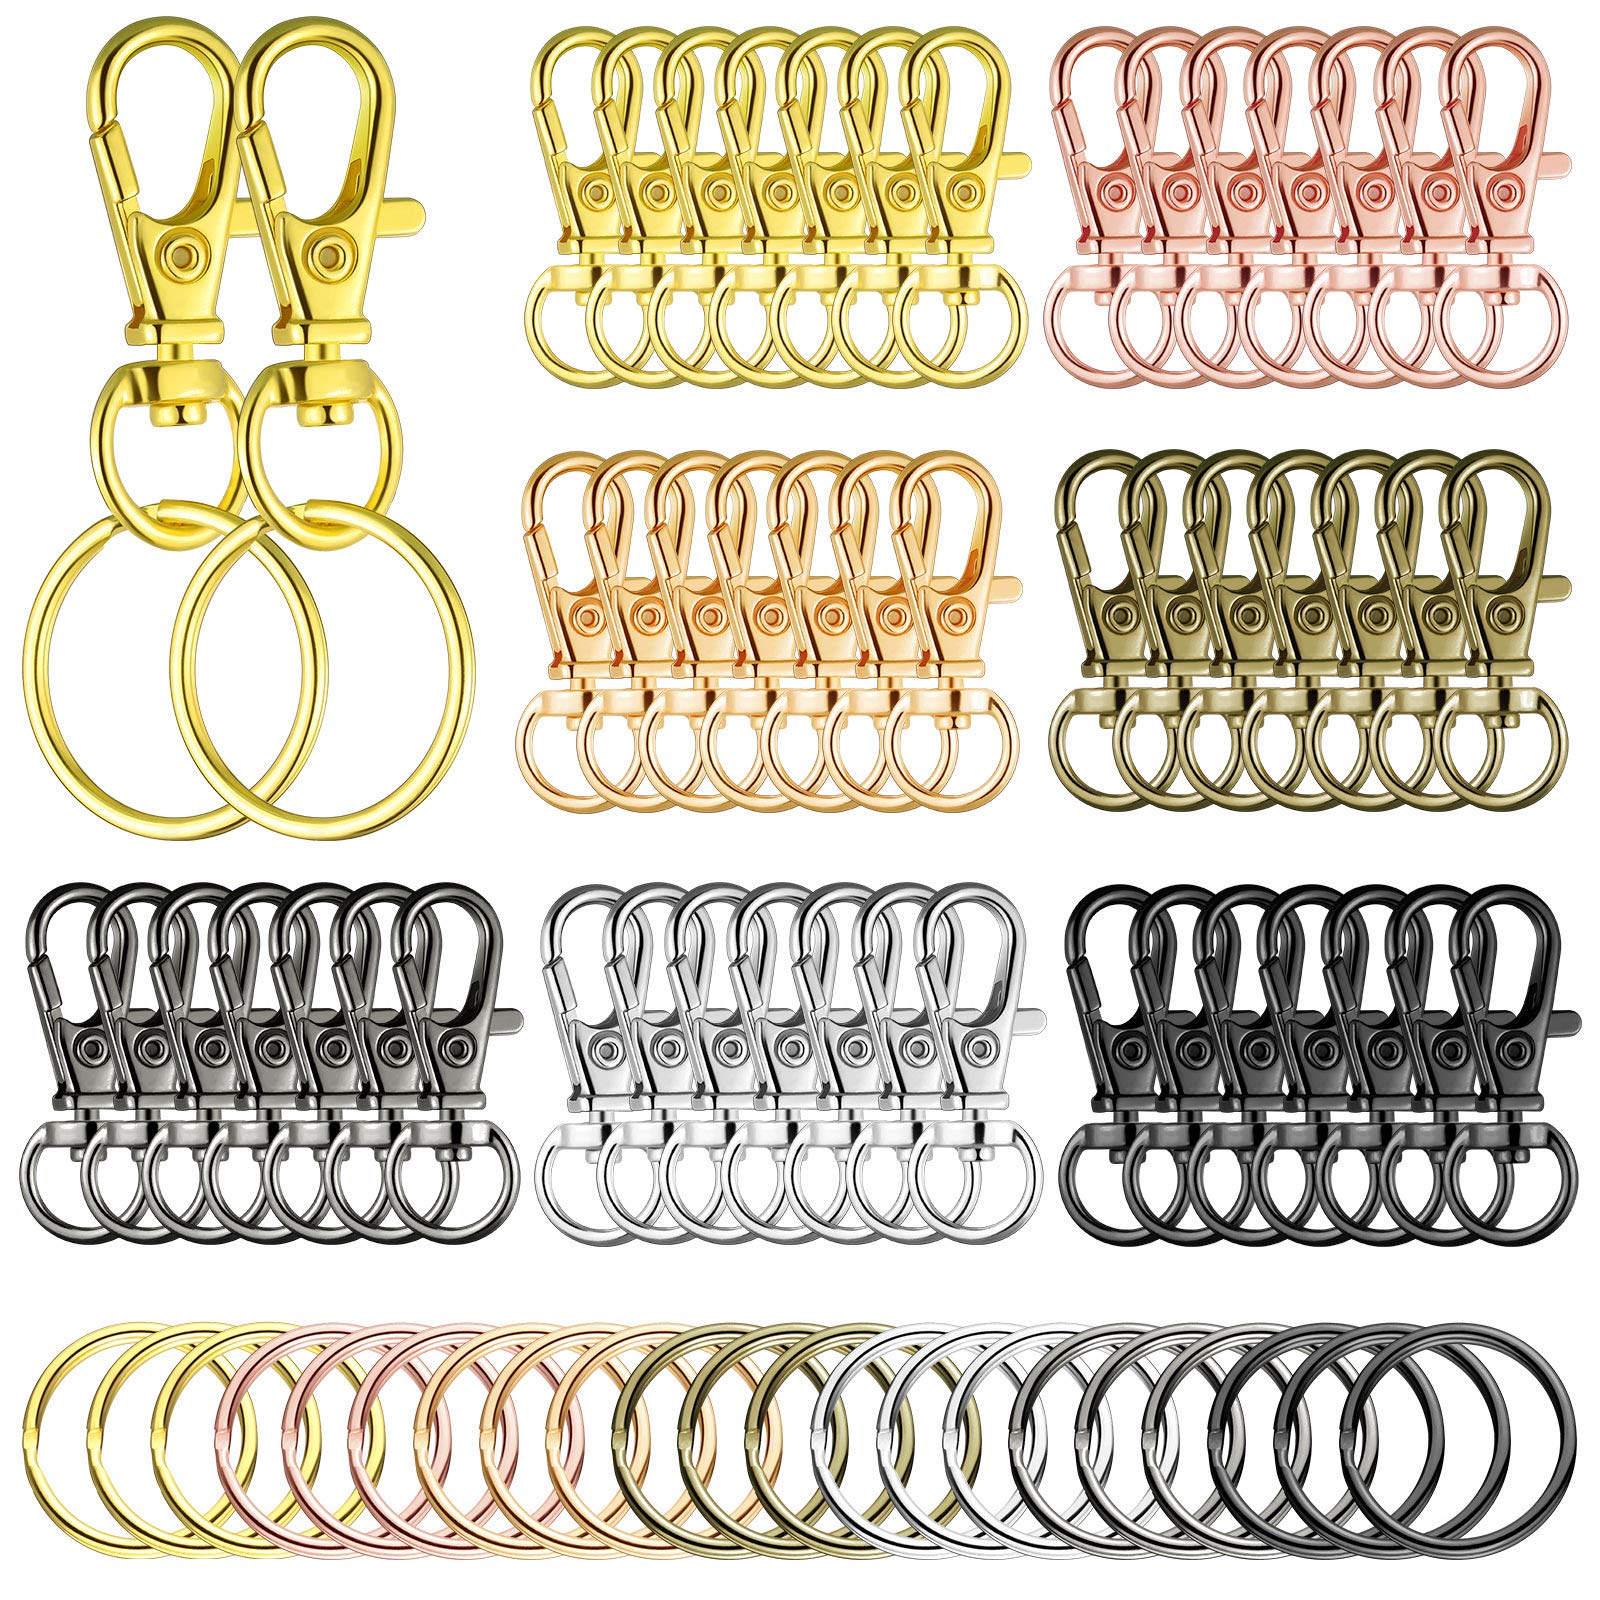 5pcs Key Chain for Keys, Lobster Claw Clasps Keychain for DIY, Silver